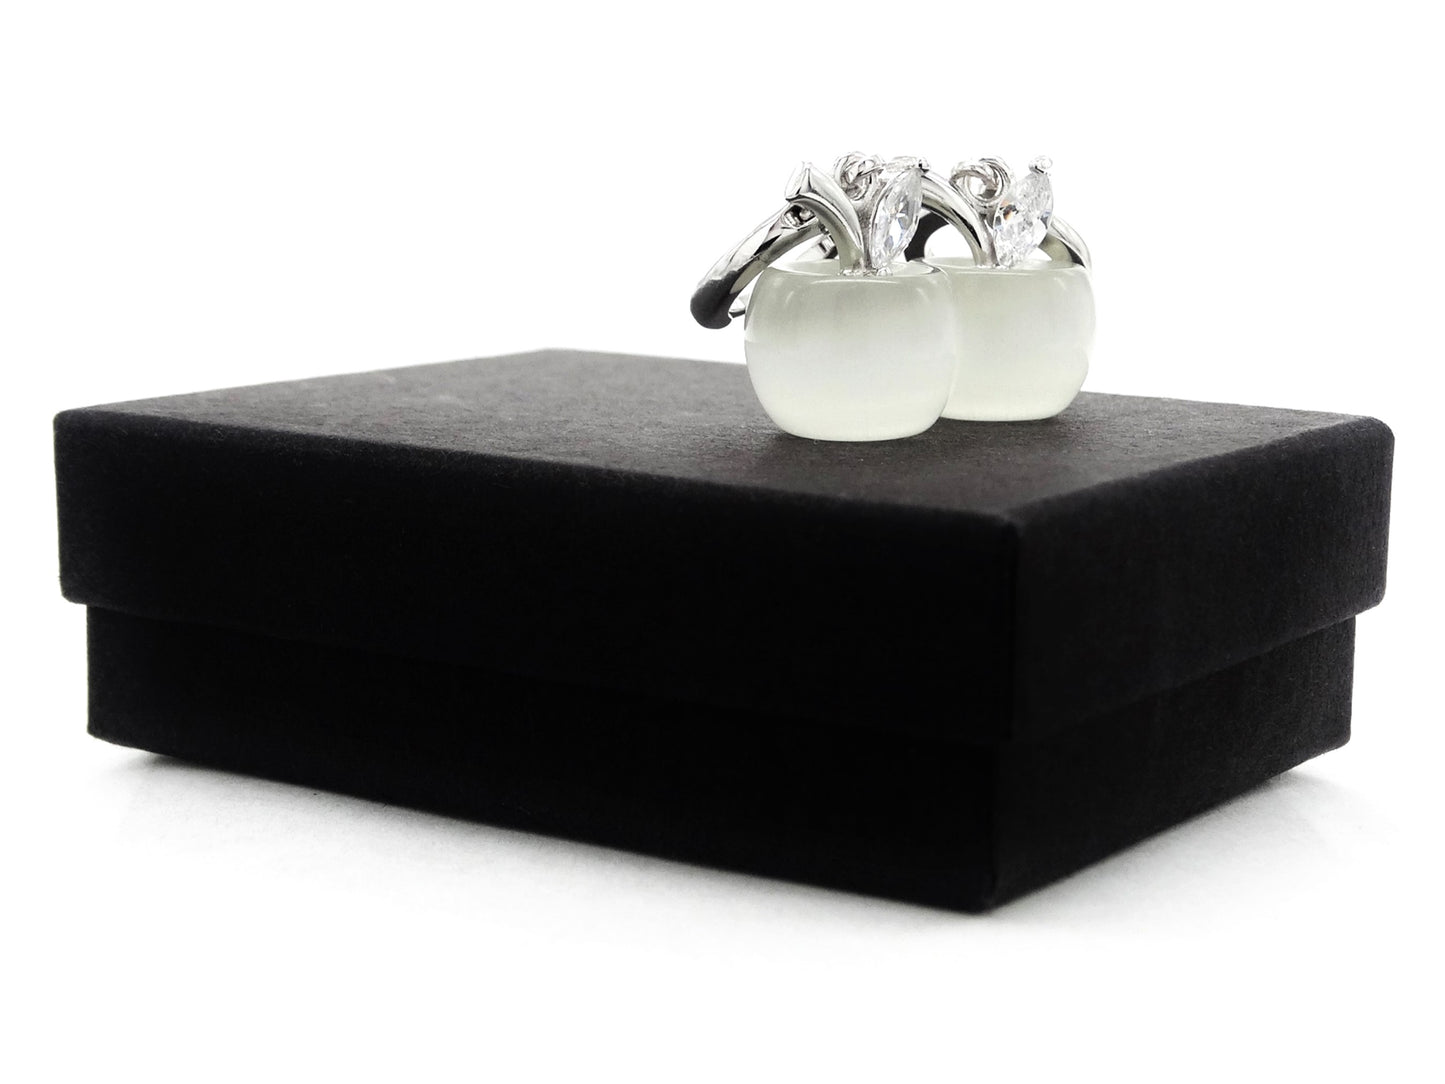 White apple hoop earrings GIFT BOX